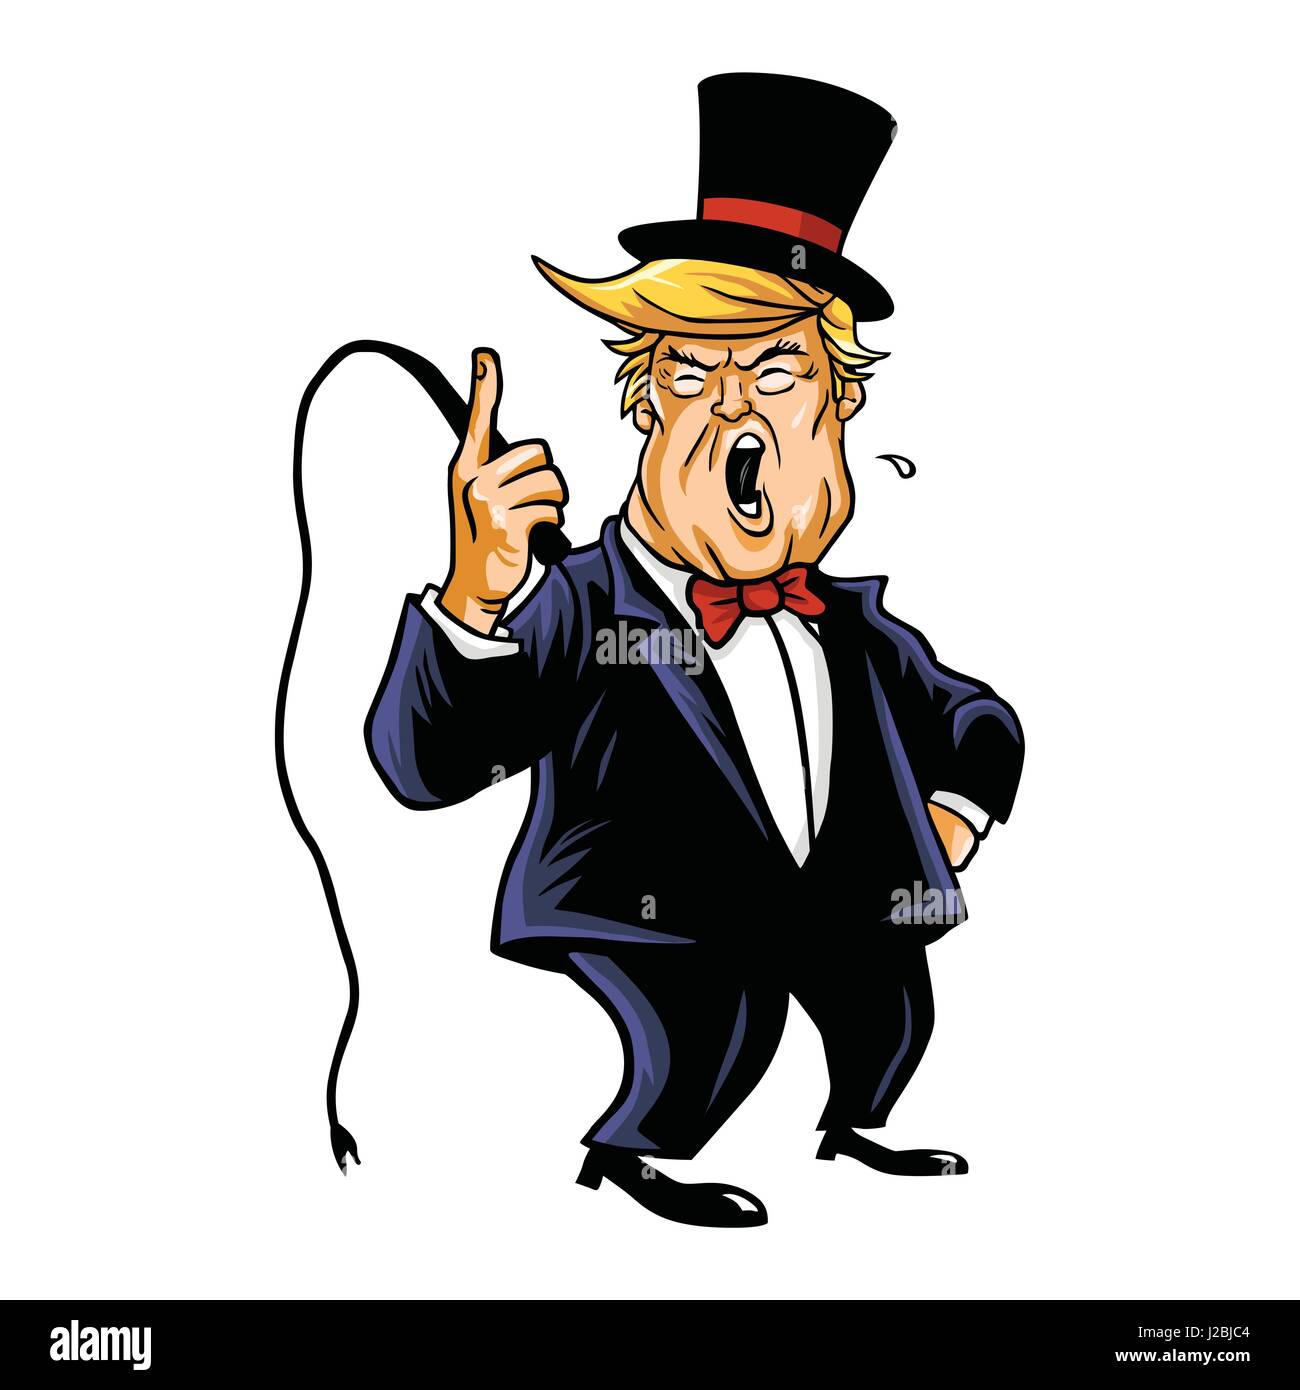 Donald Trump Circus Ringleader Cartoon Stock Vector